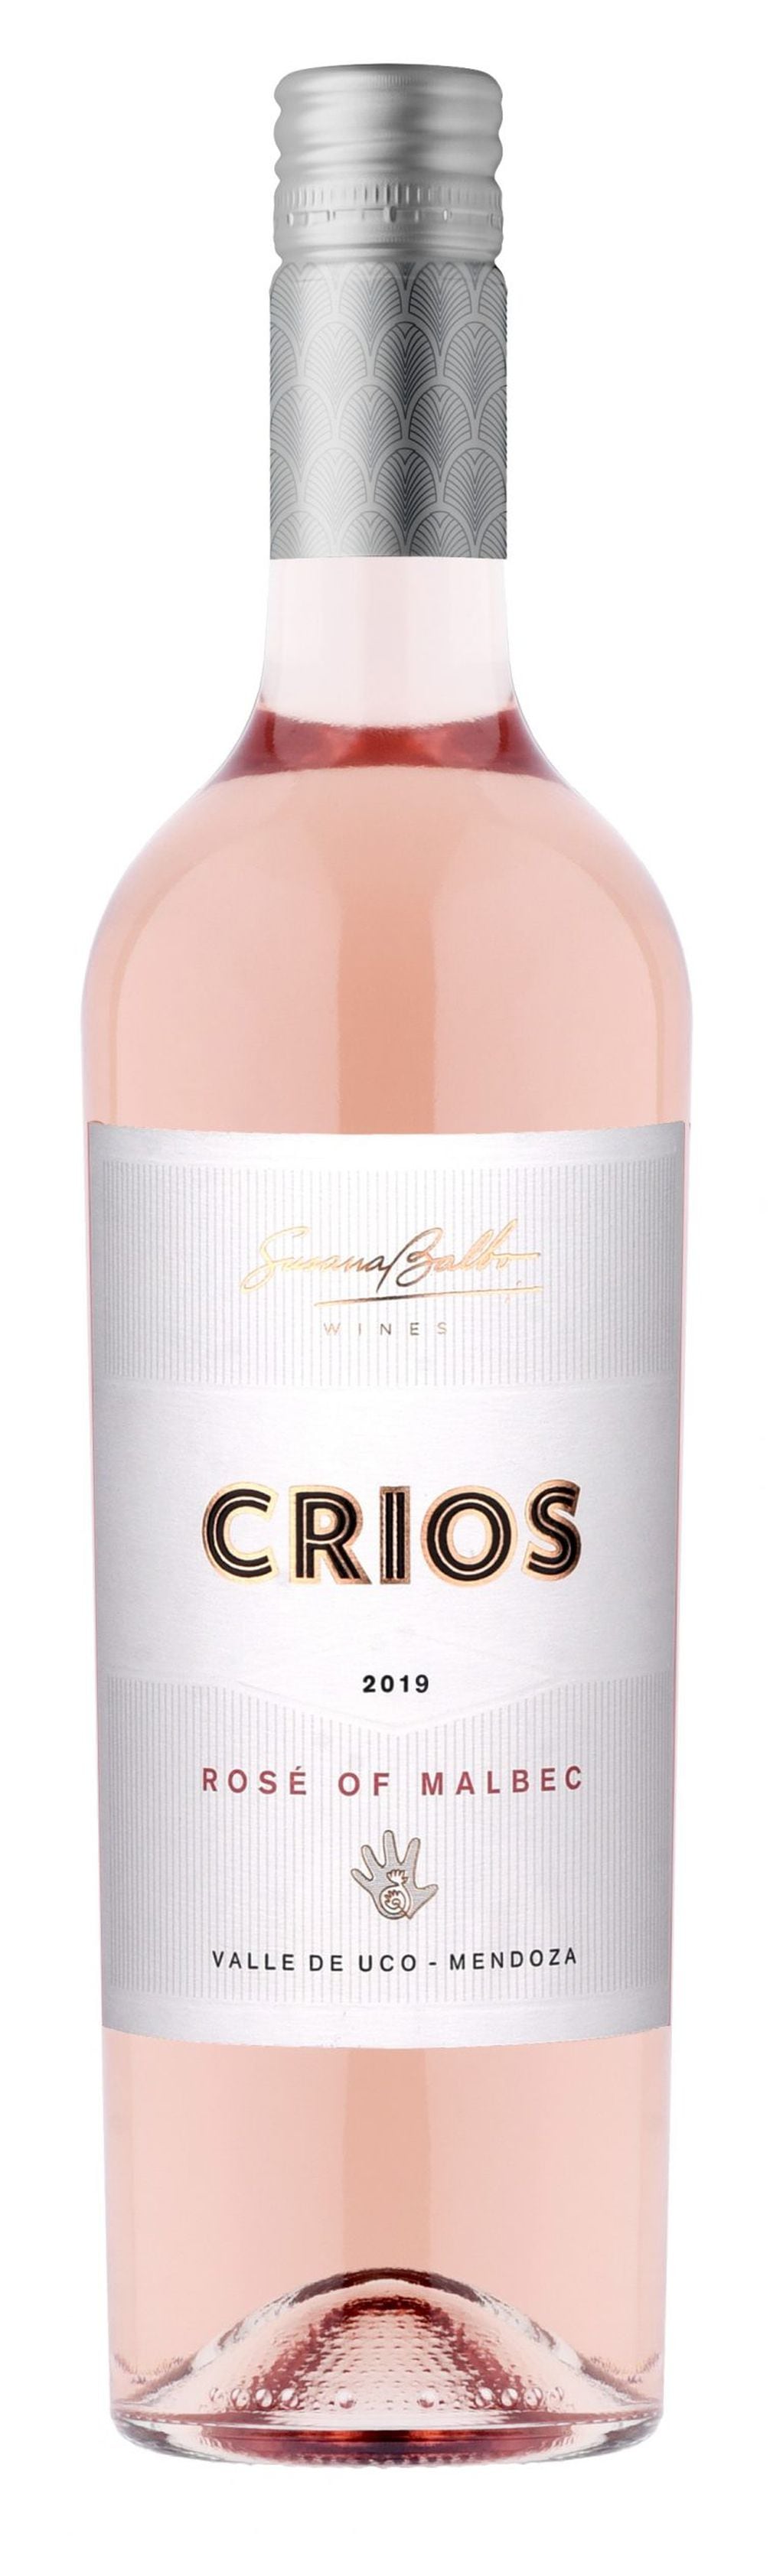 Vino Crios (Rumbos)